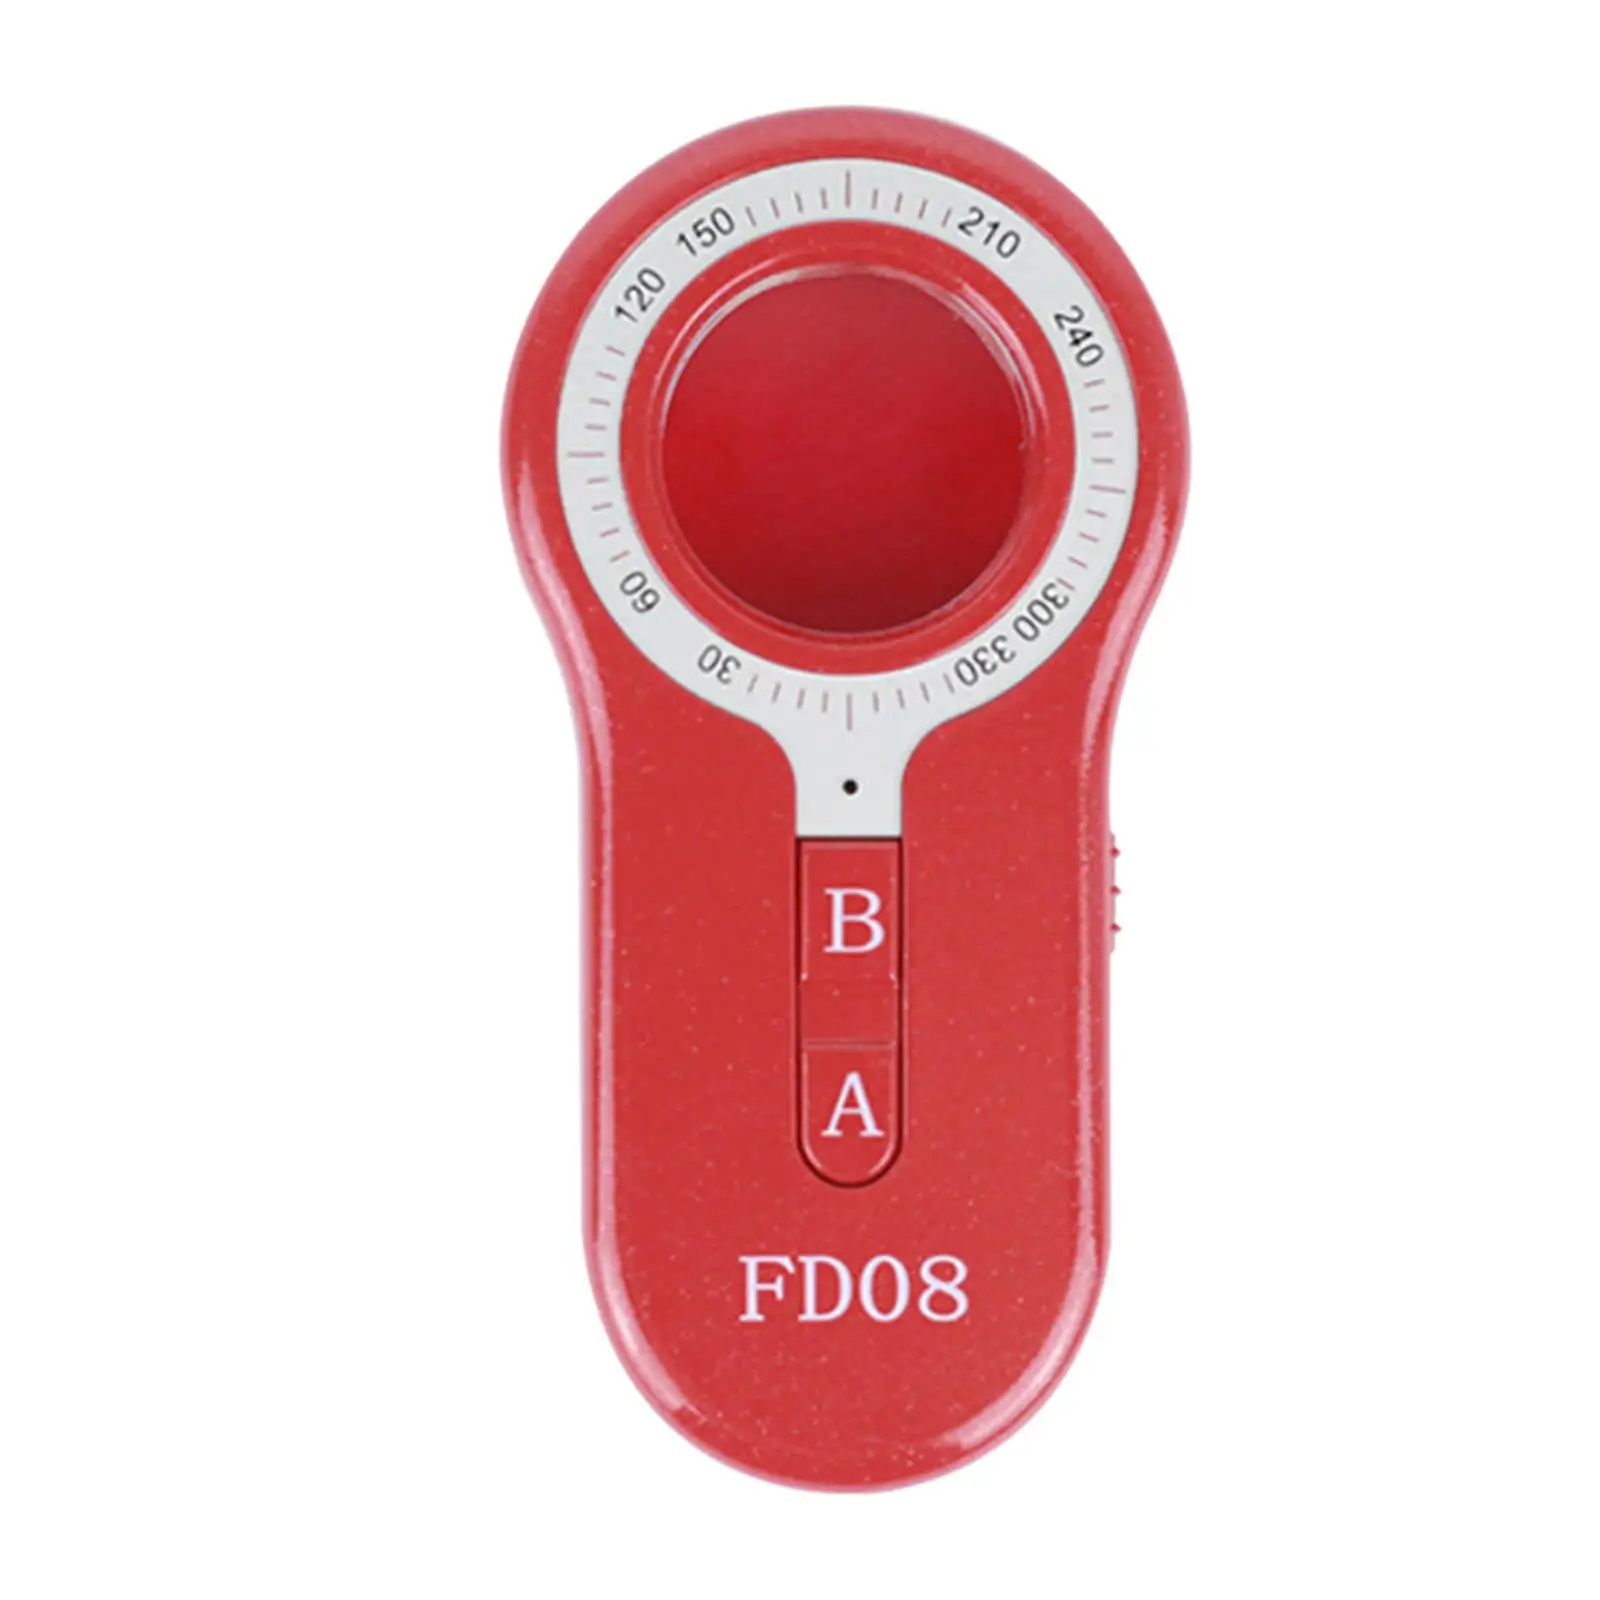 FD08 Wireless Detector Camera Multifunctional Infrared IR Scanner for Restrooms Alarm Emergency Alert Protection Vibration Alarm